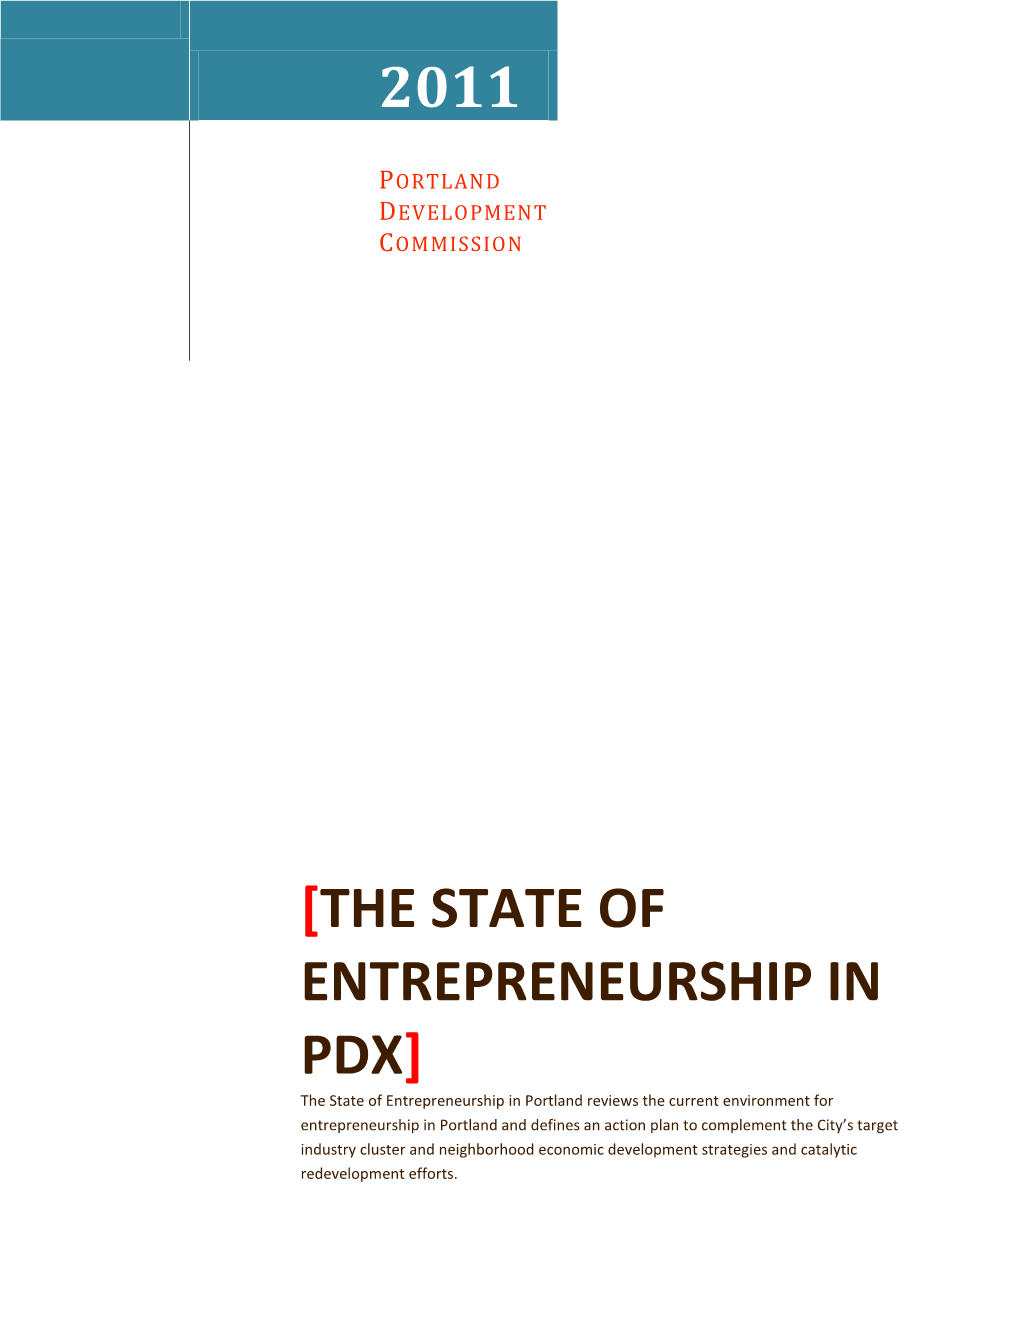 The State of Entrepreneurship In